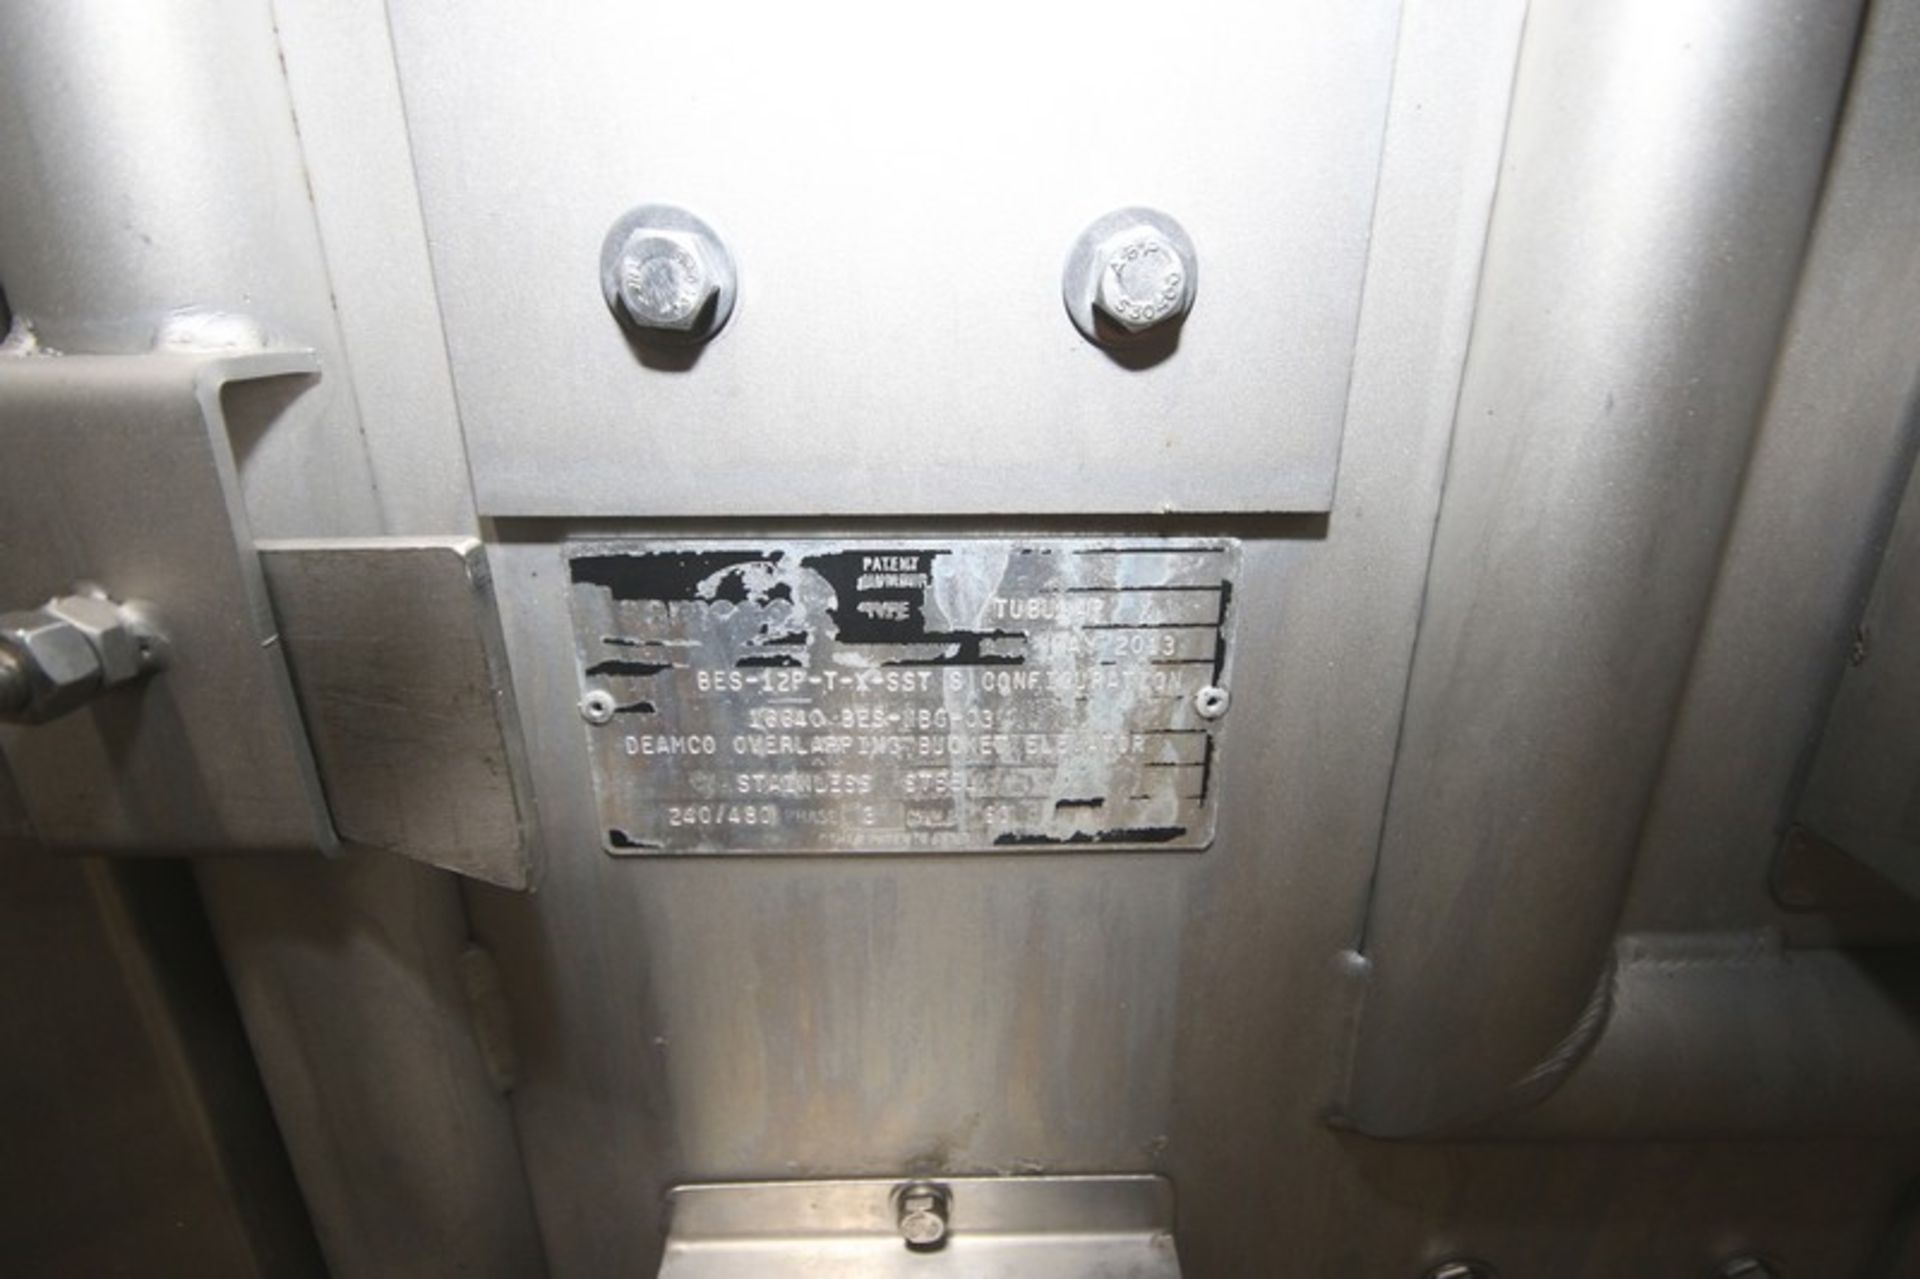 2013 Deamco S-Configuration Bucket Elevator, M/N BES-12P-T-X-SST, S/N 16640-BES-NBG-03, 240/480 - Image 3 of 4